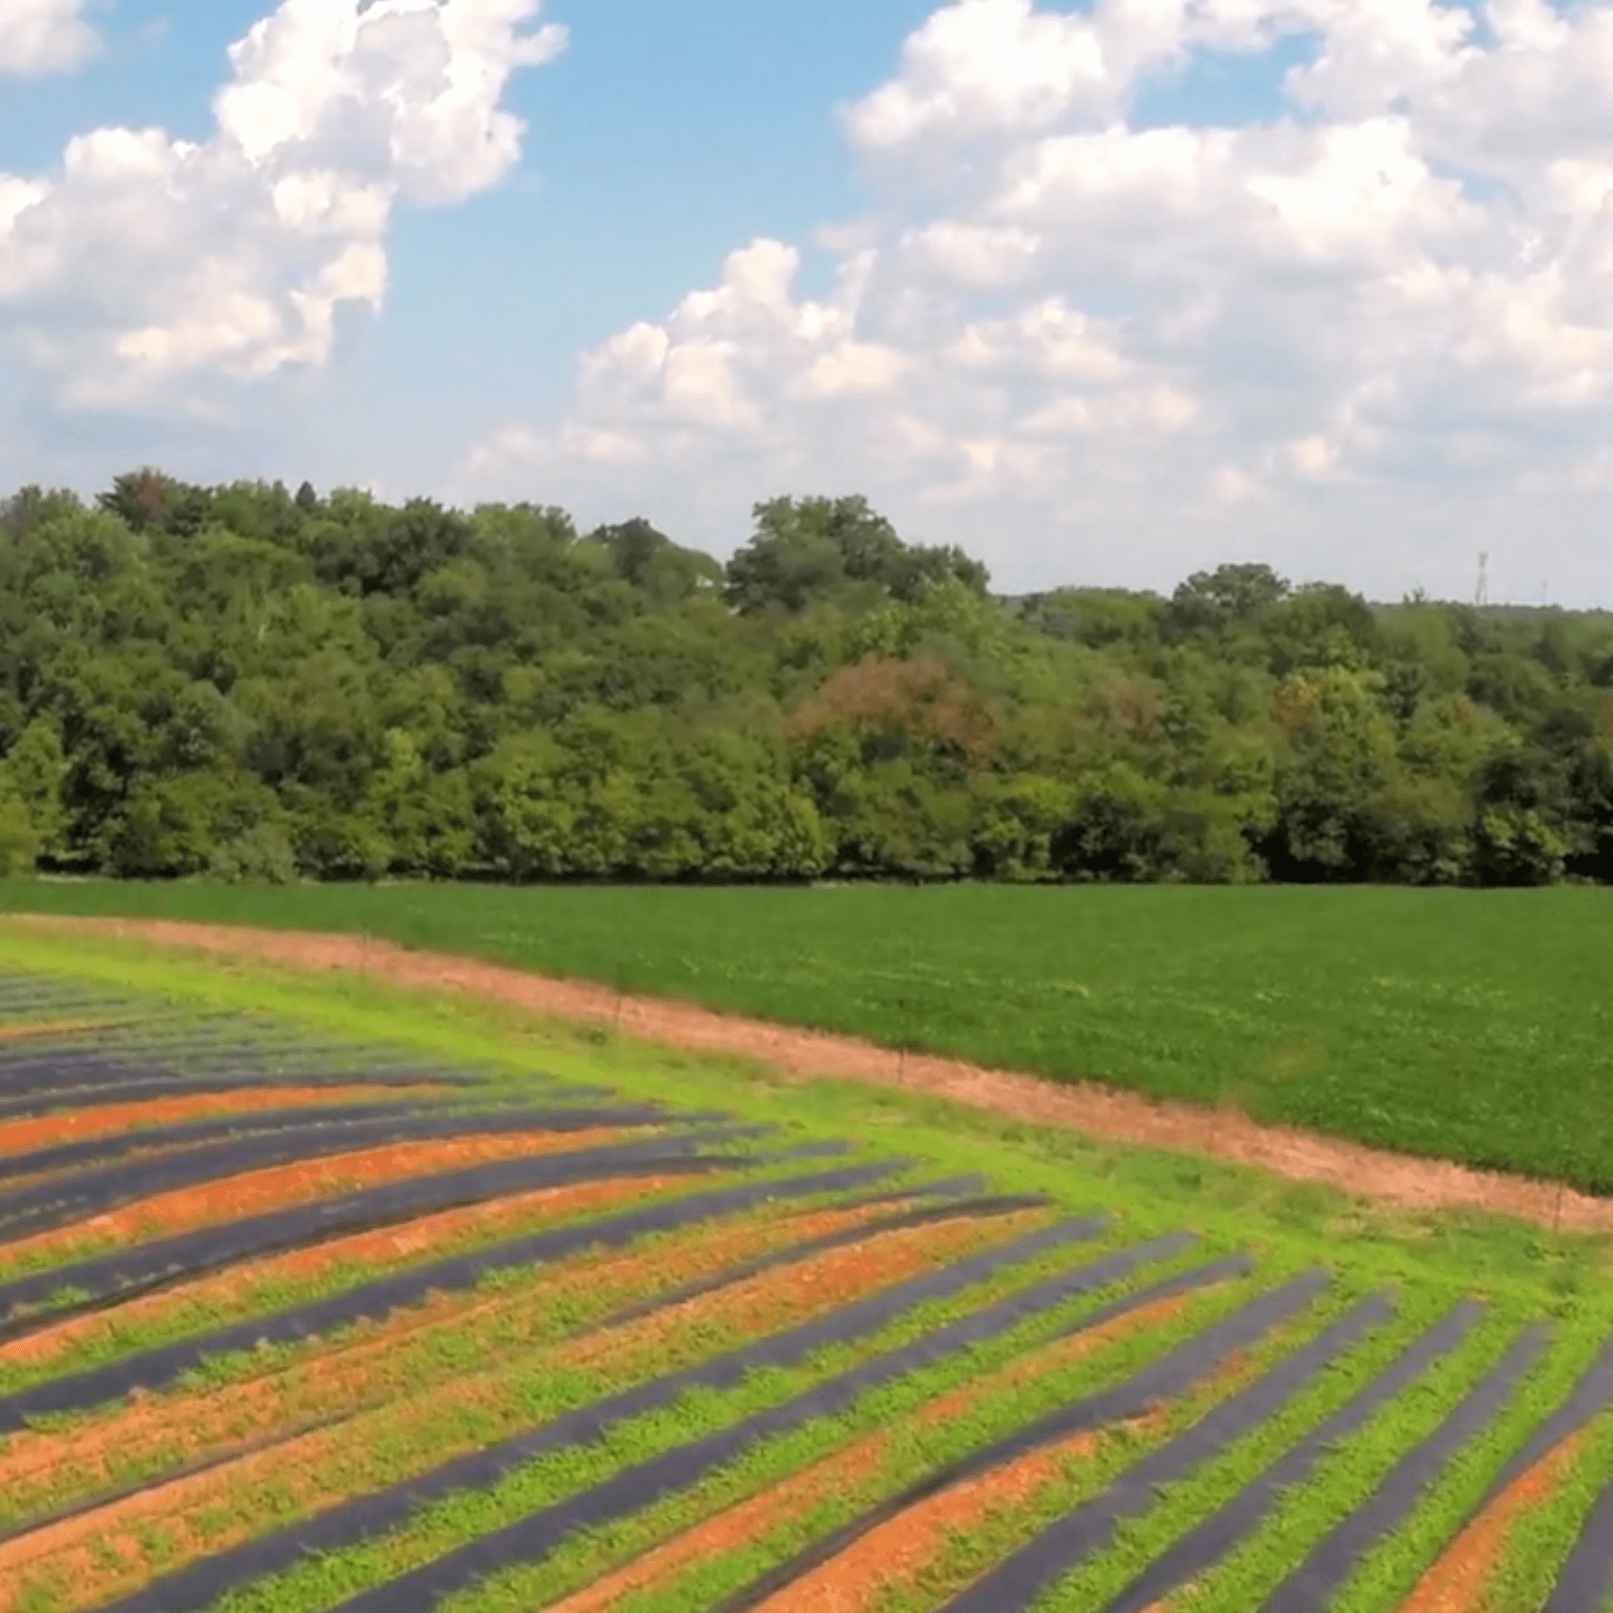 Strawberry Field